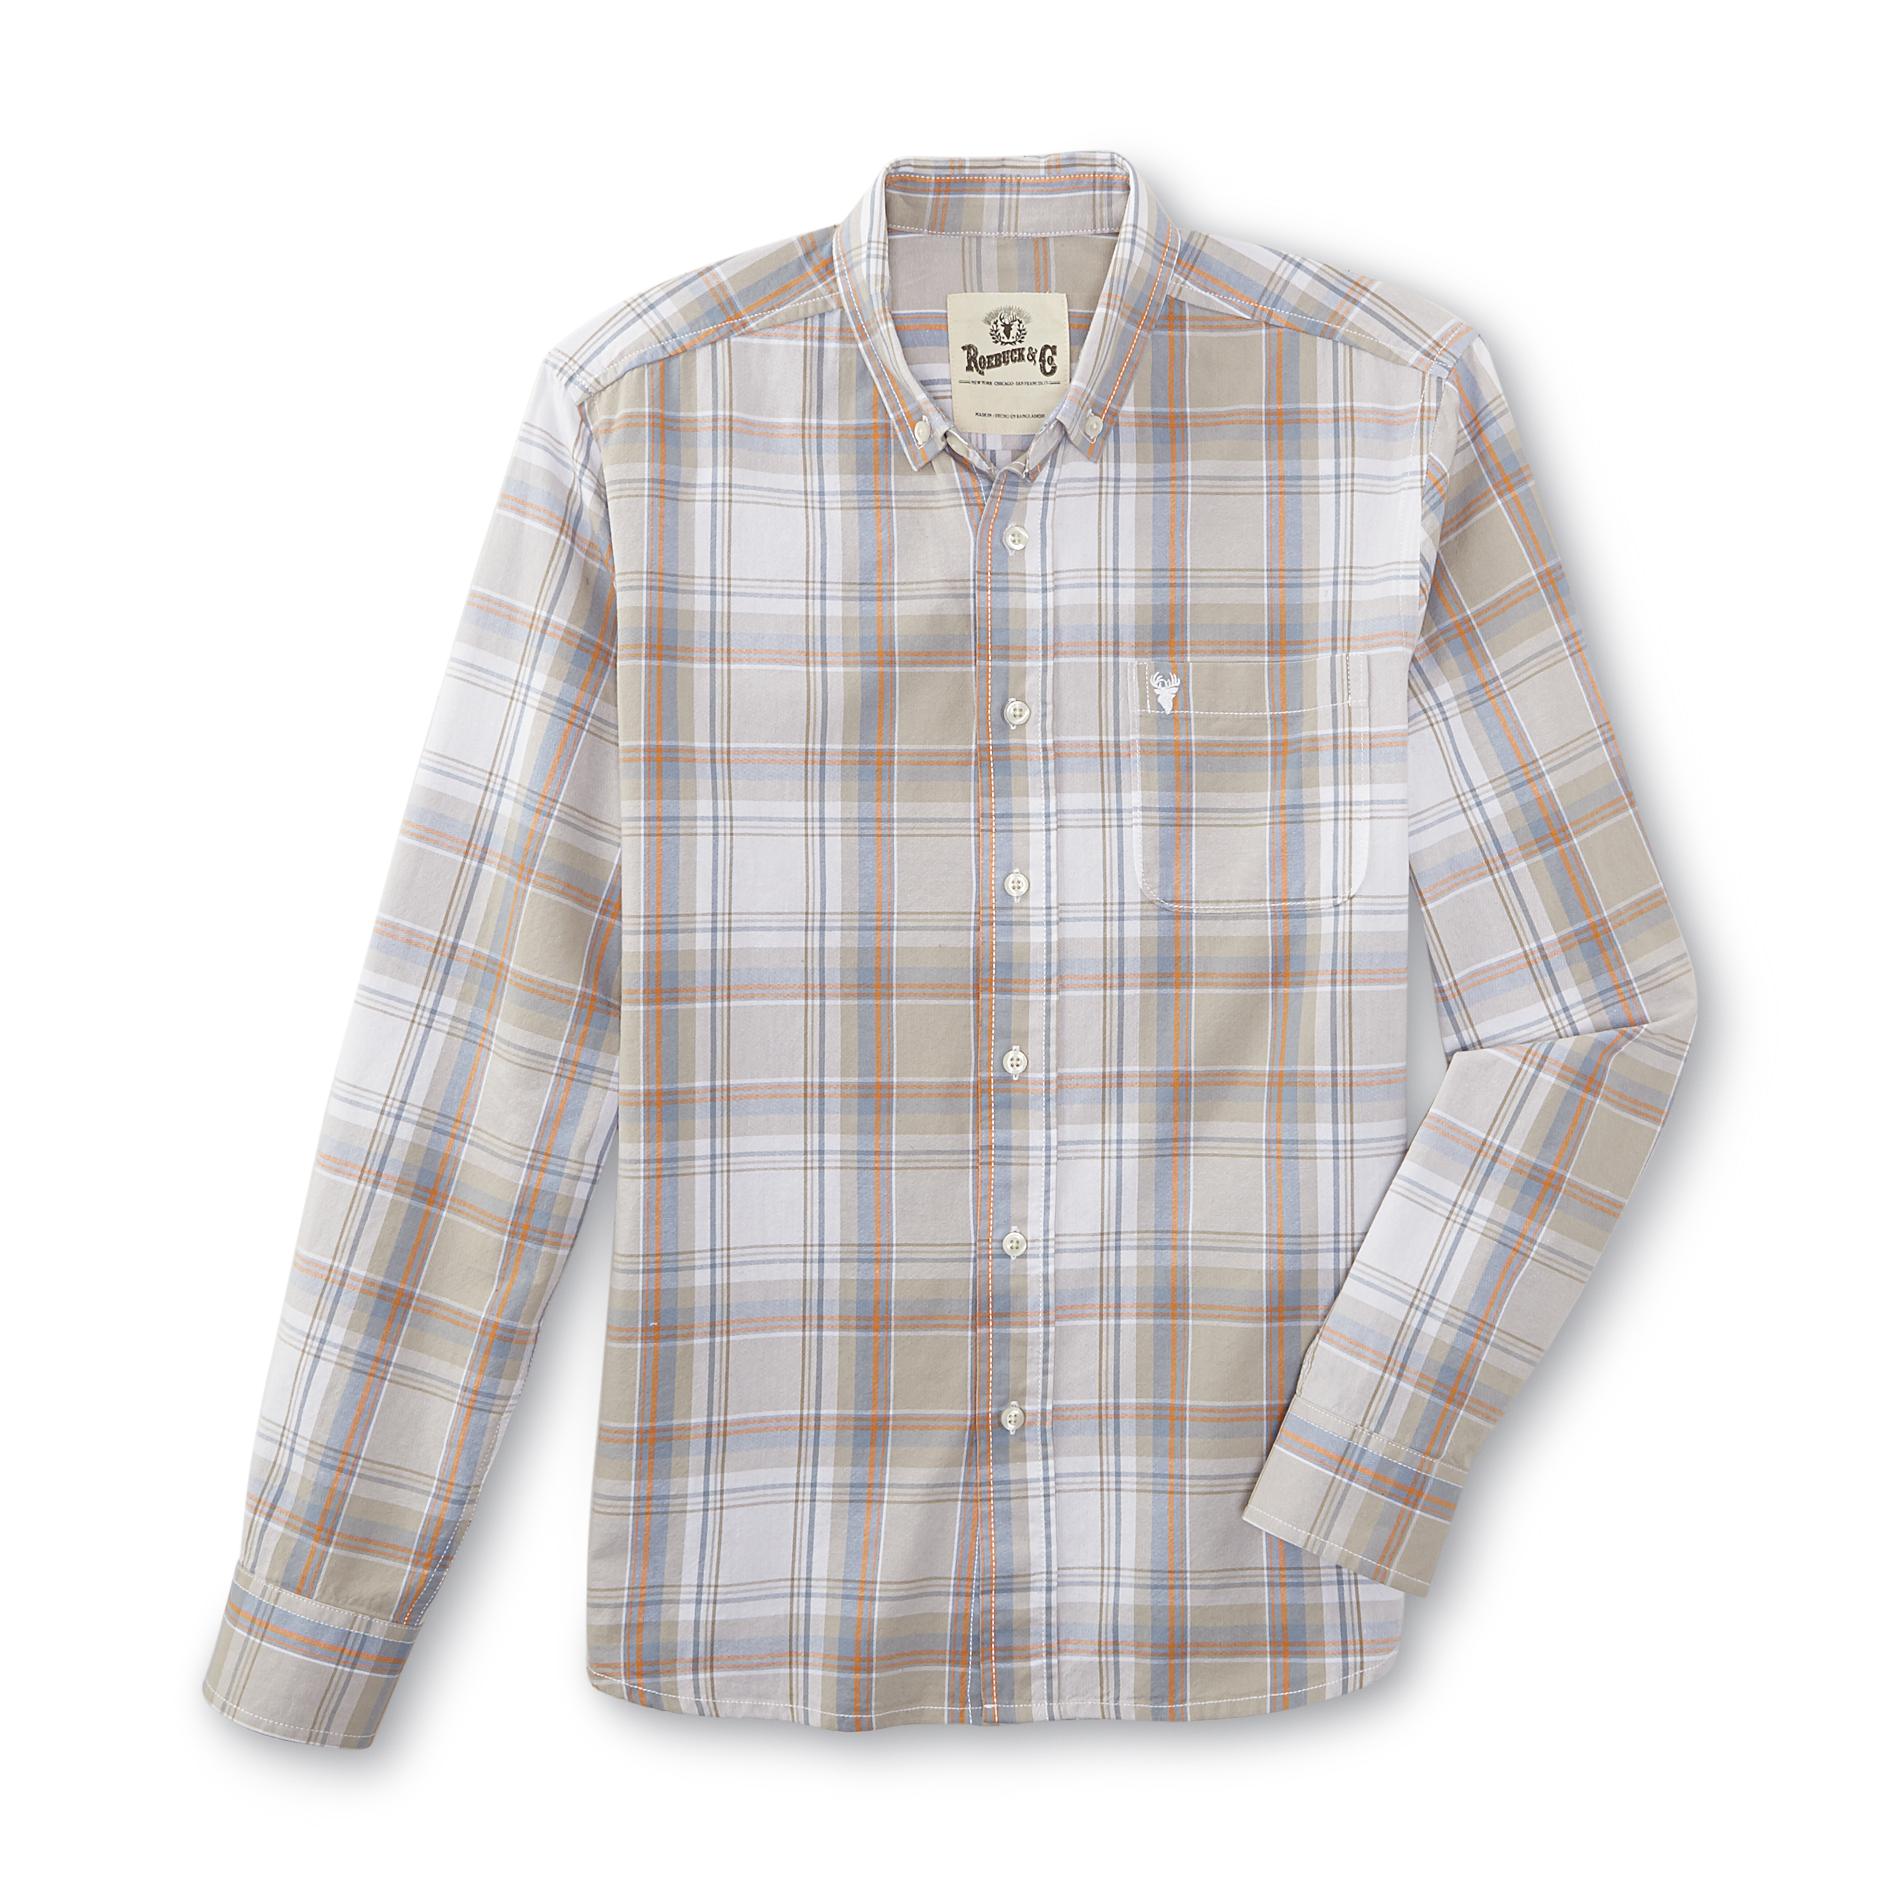 Roebuck & Co. Young Men's Long-Sleeve Oxford Shirt - Plaid